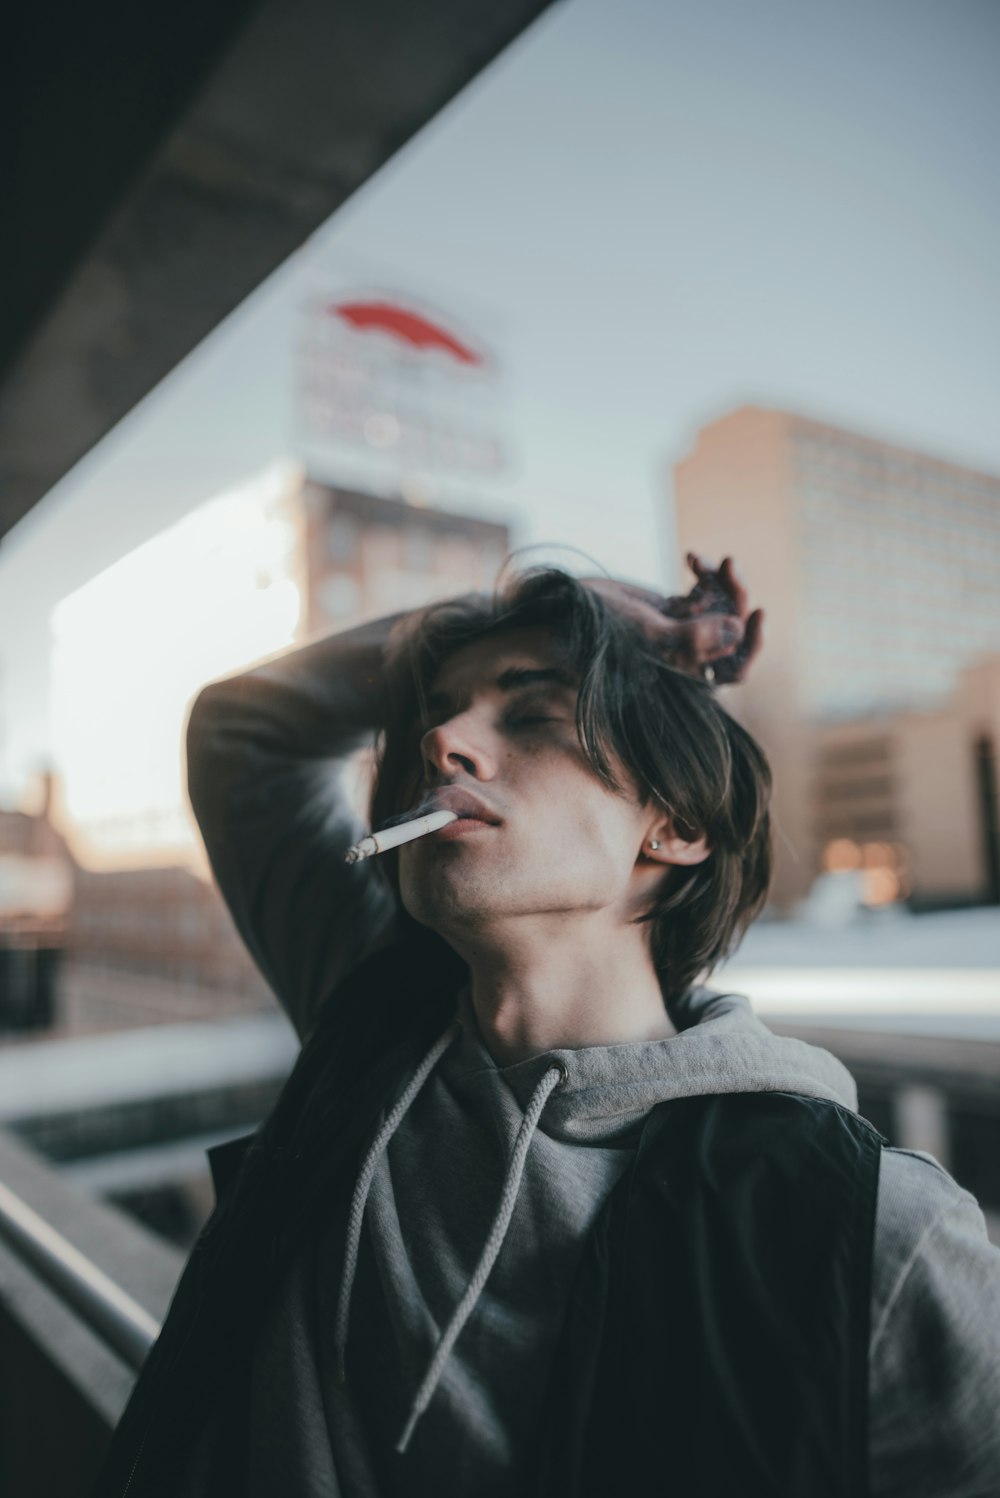 woman in black jacket smoking cigarette